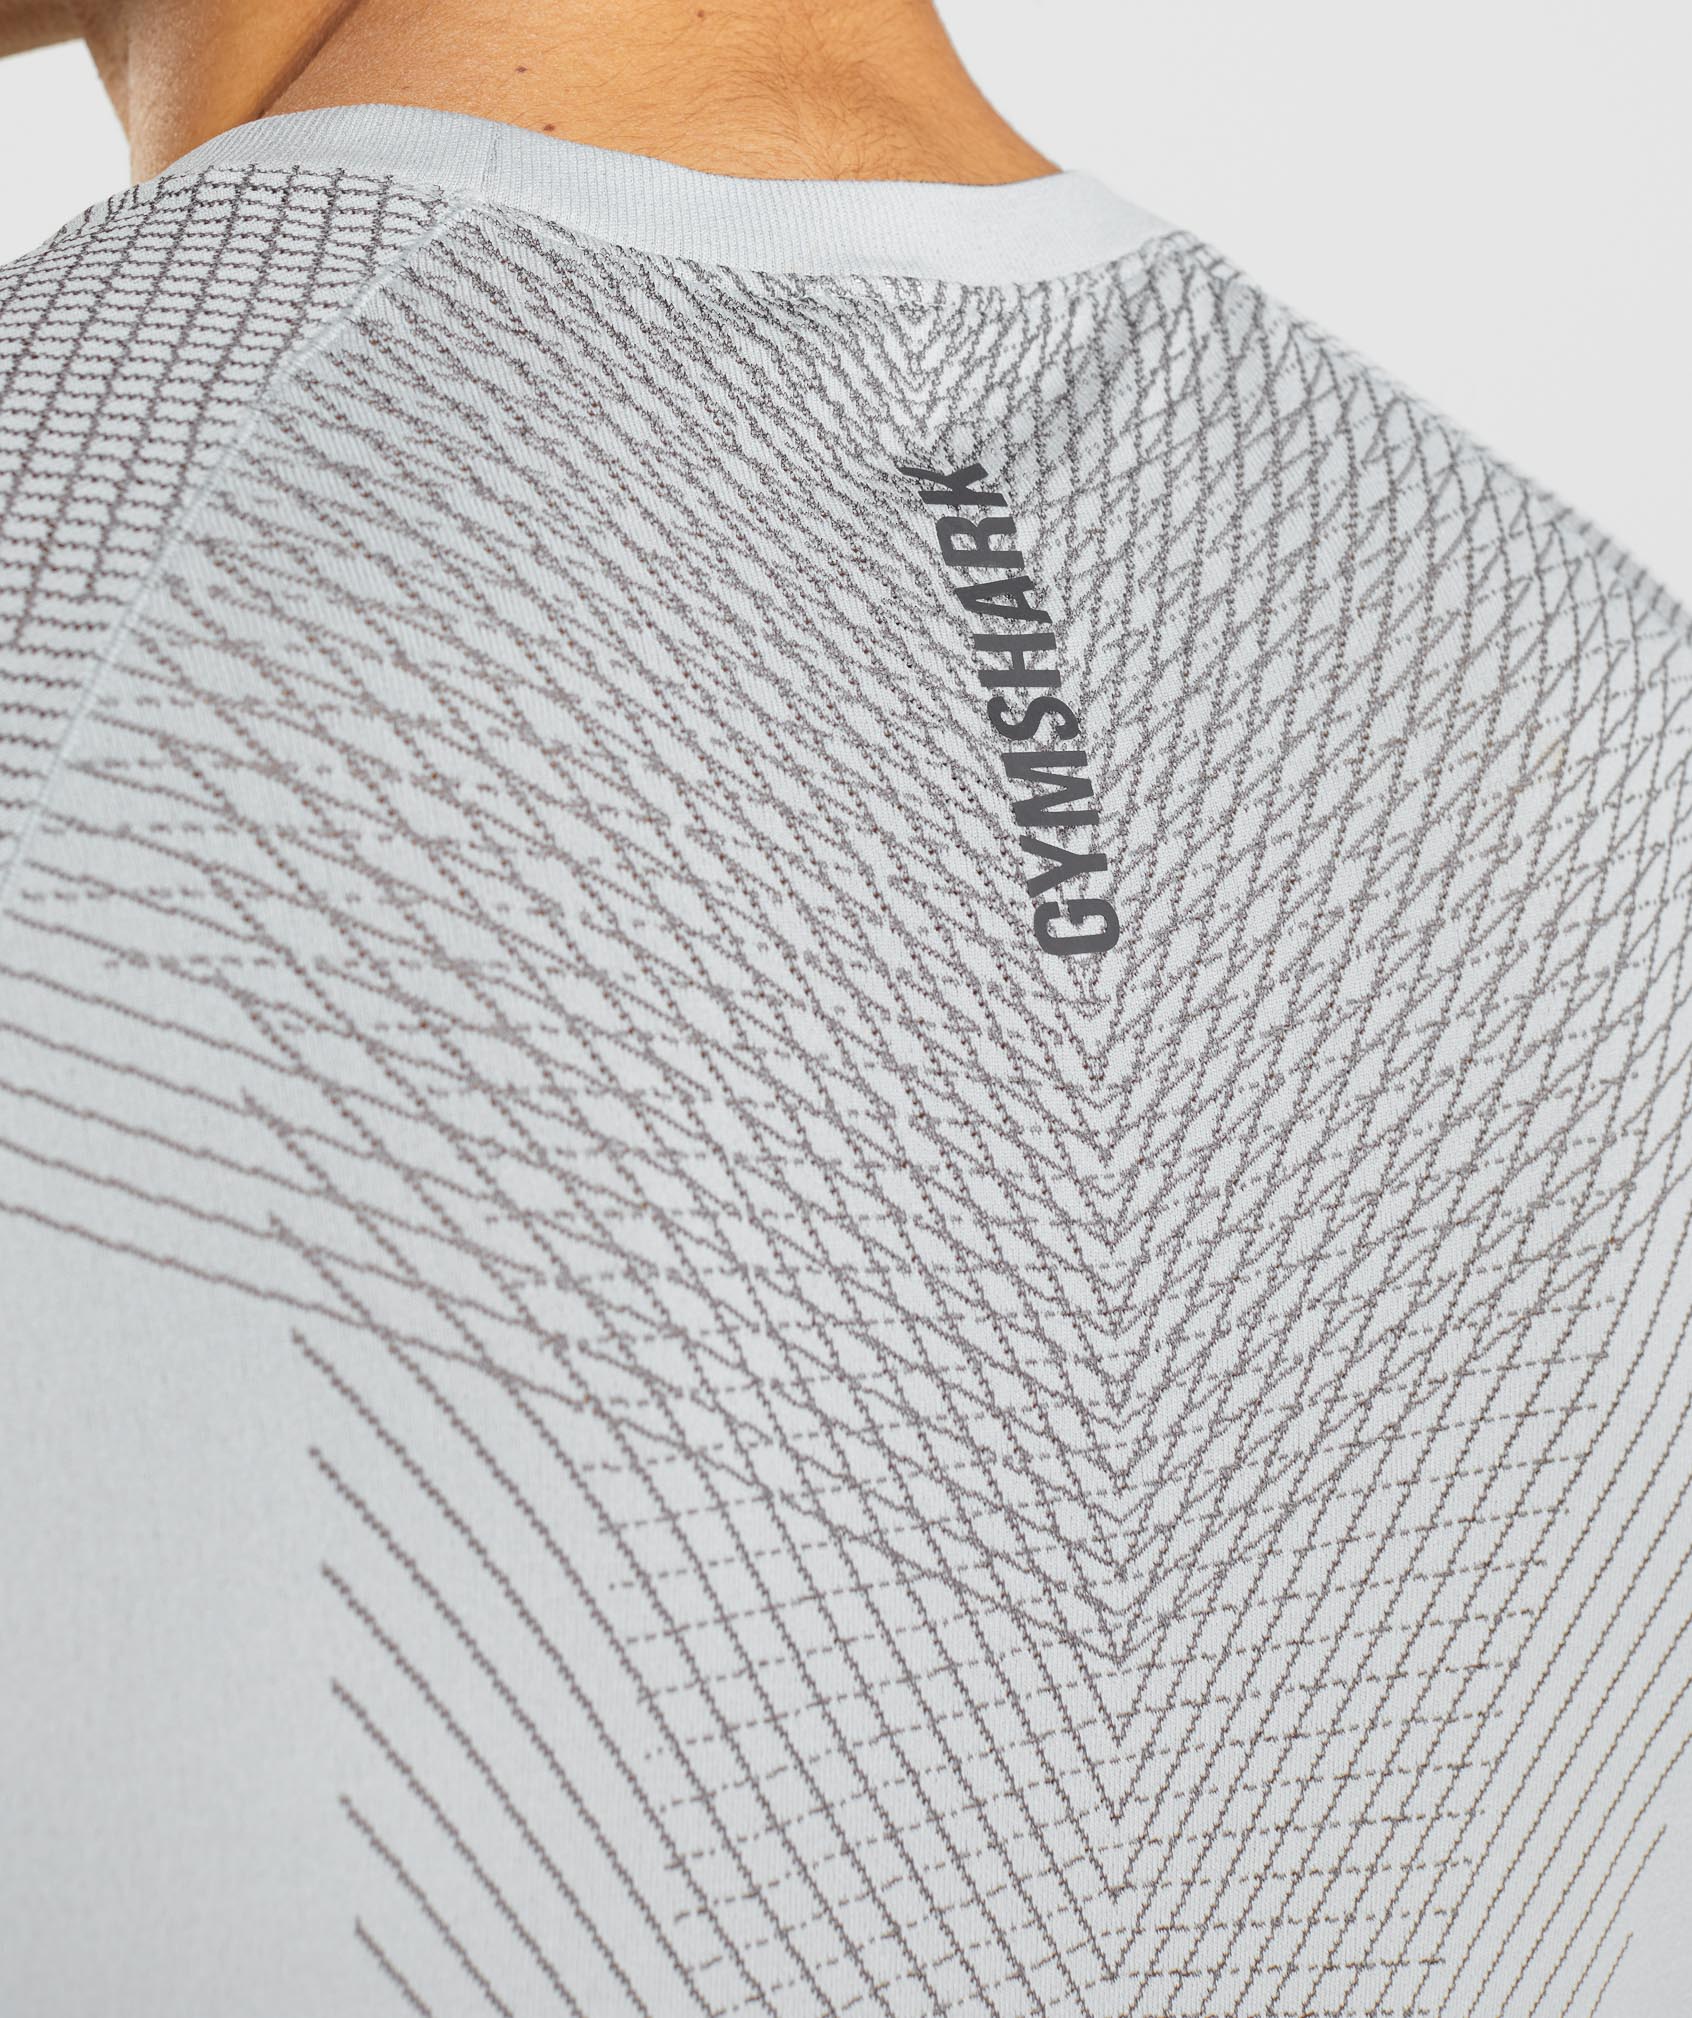 Apex Seamless T-Shirt in Light Grey/Onyx Grey - view 5